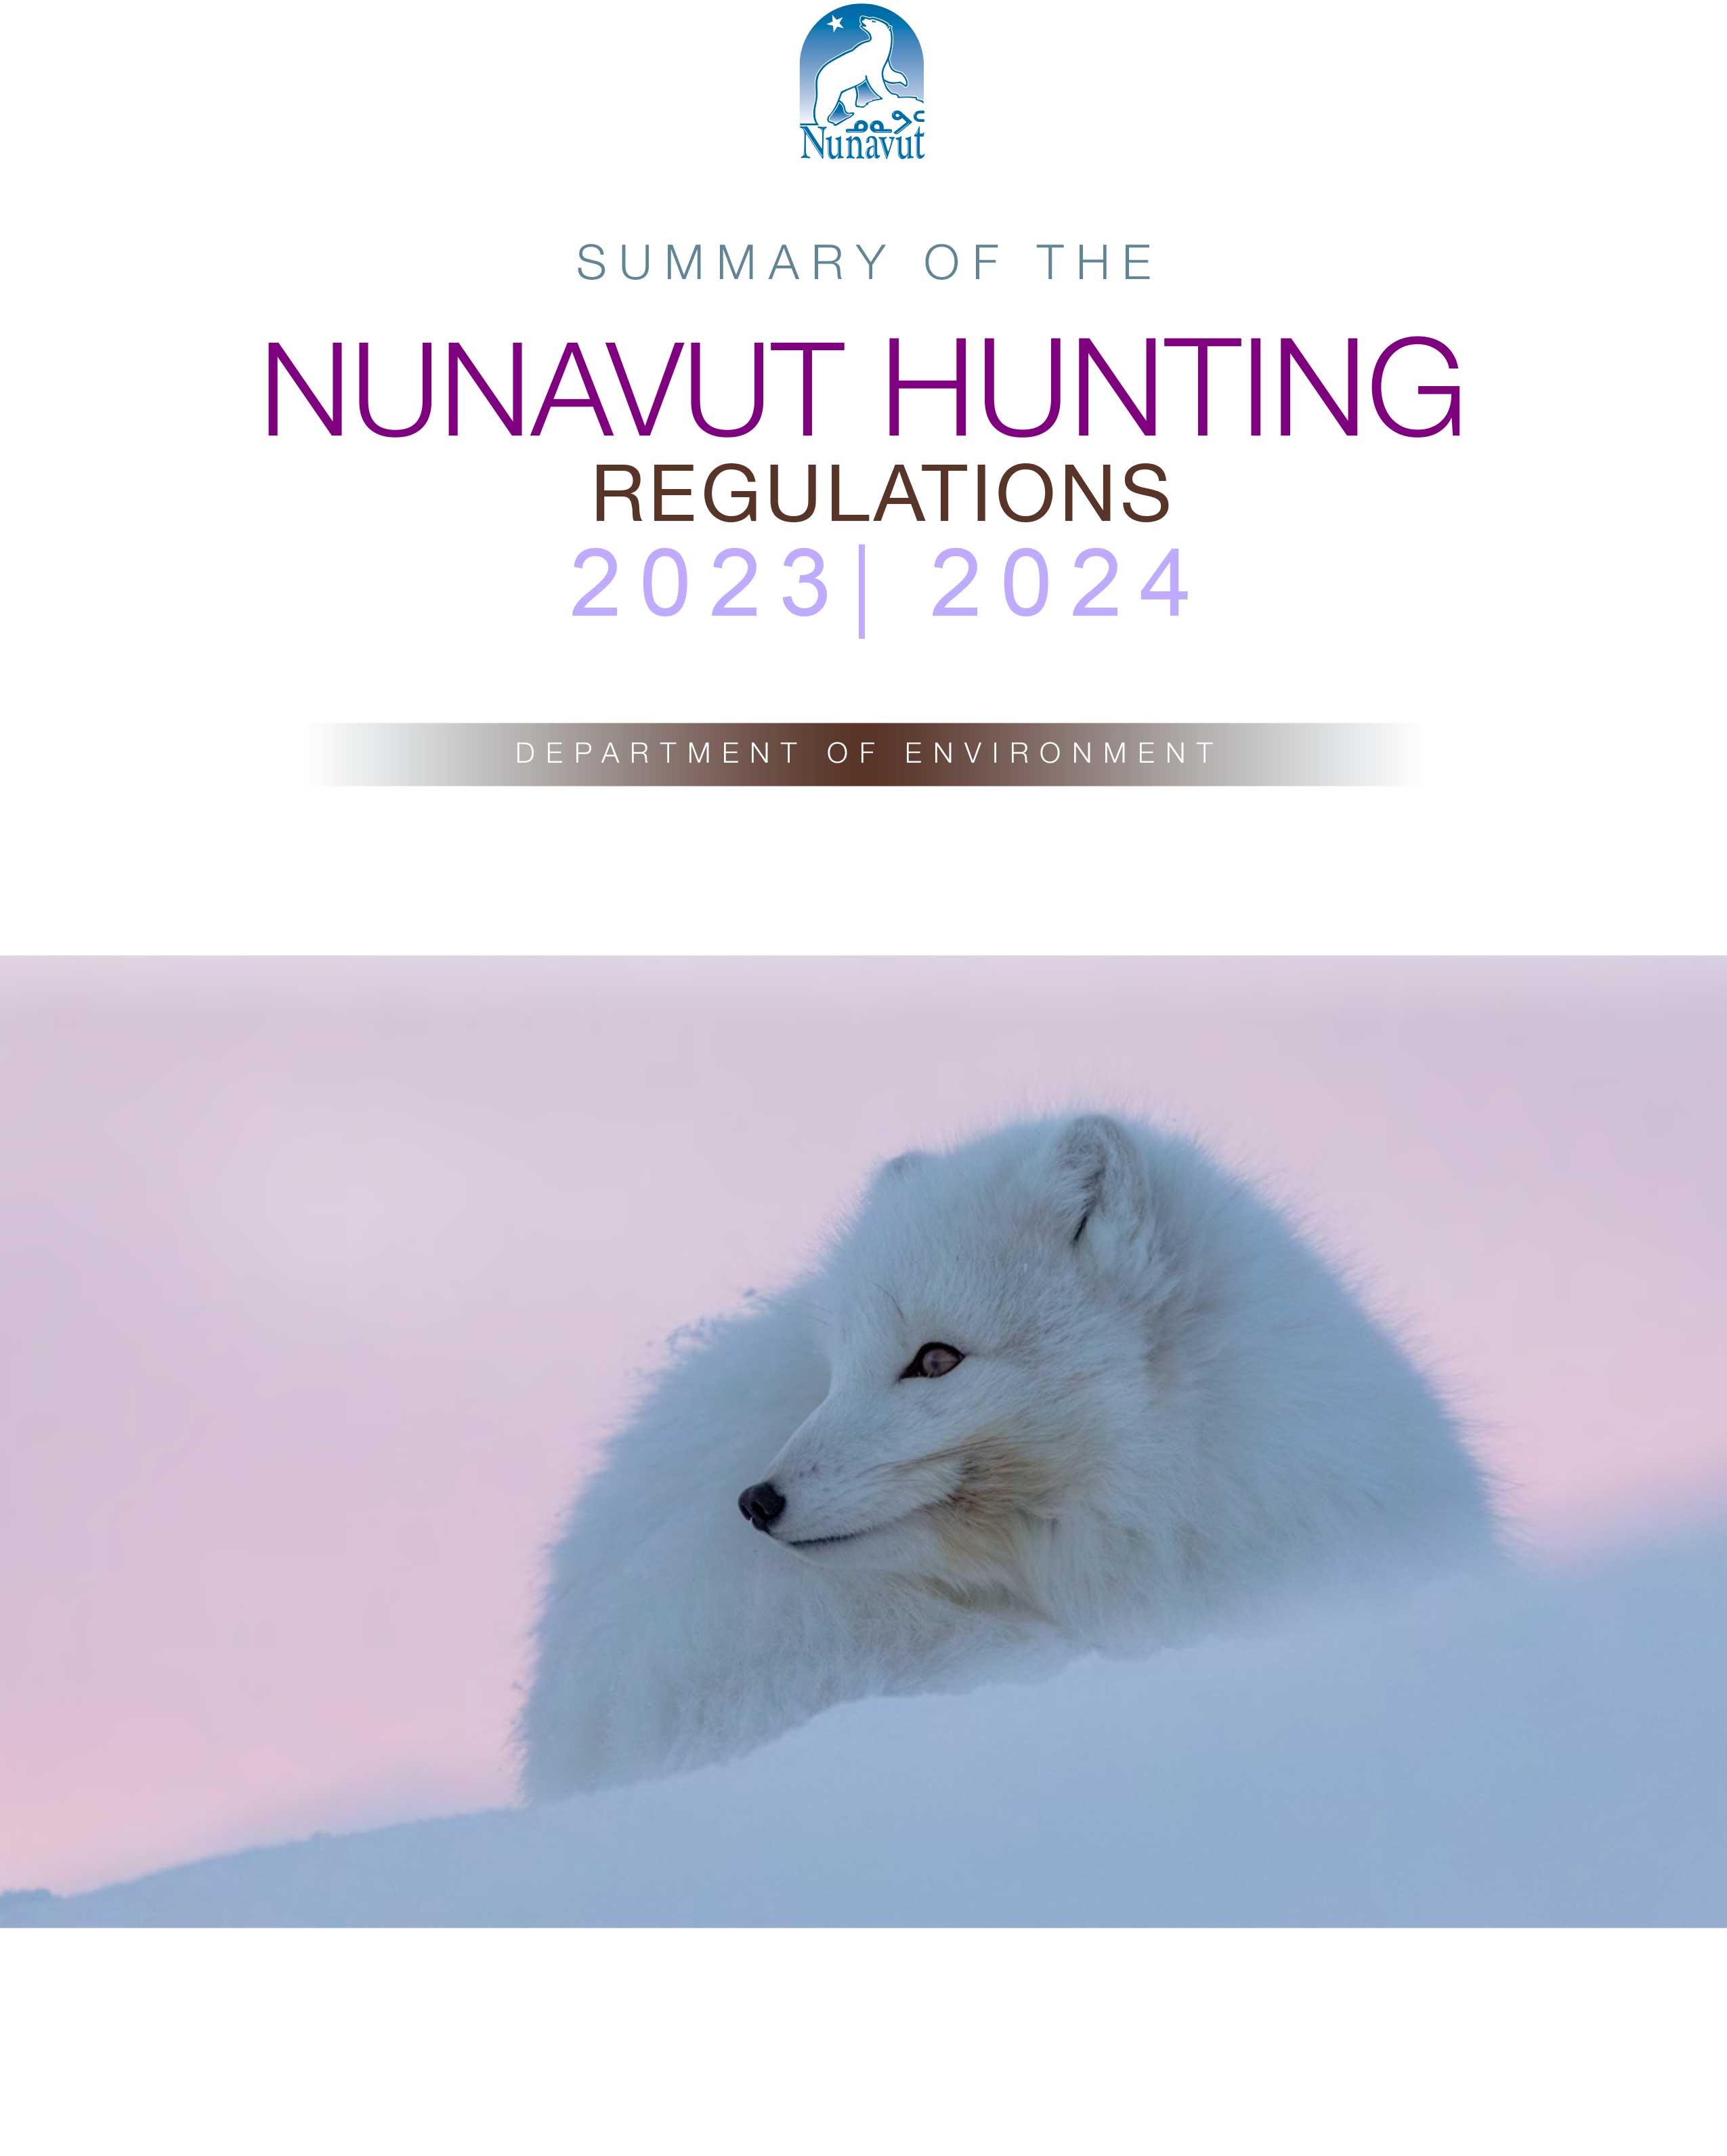 Nunavut Hunting Guide 2023-2024